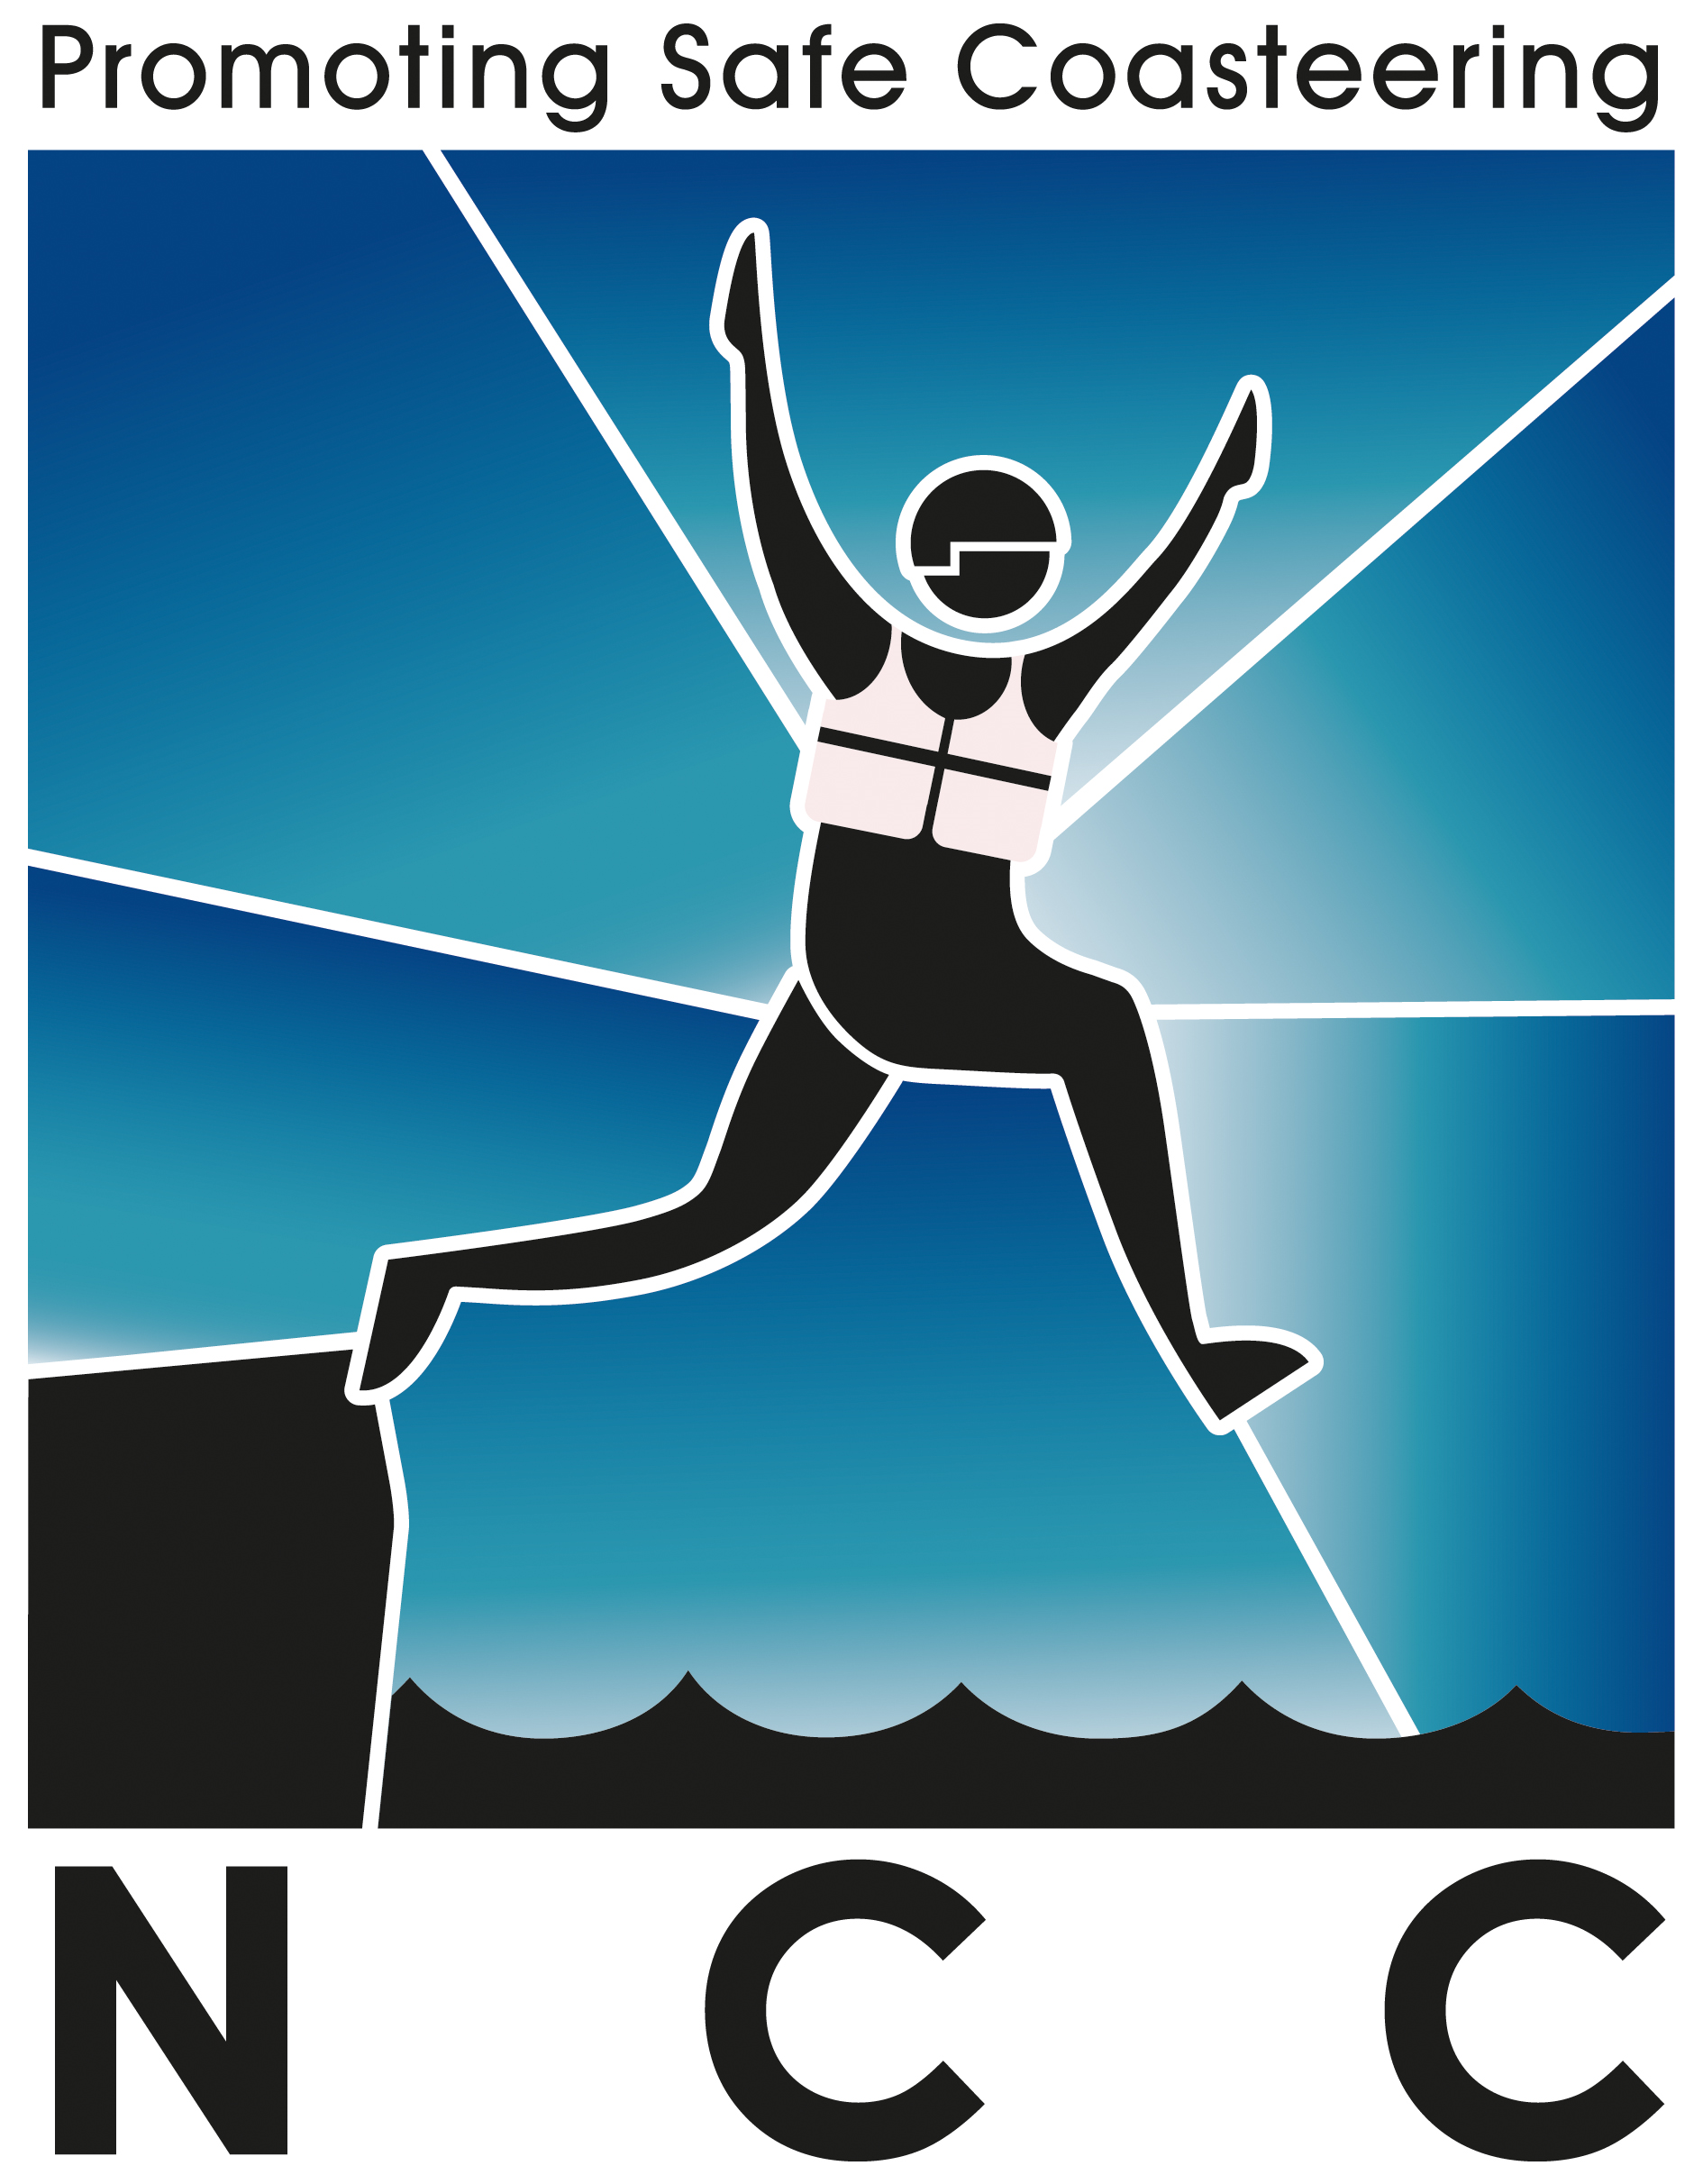 NCC PromotingSafeCoasteering RGB